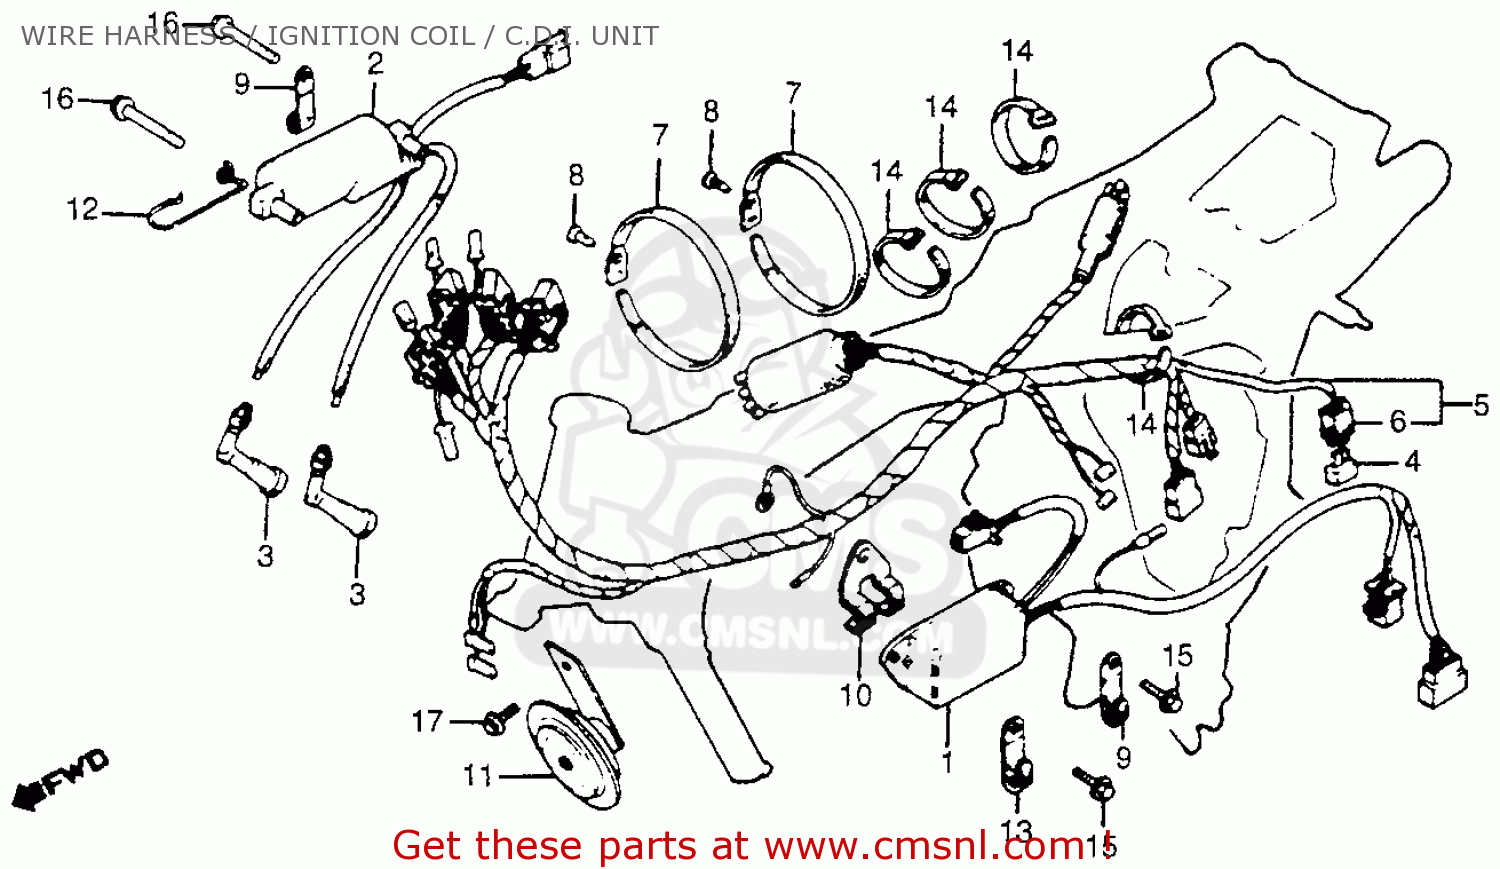 Honda CM400T 1981 (B) USA WIRE HARNESS / IGNITION COIL / C ... honda cb750f wiring diagram 